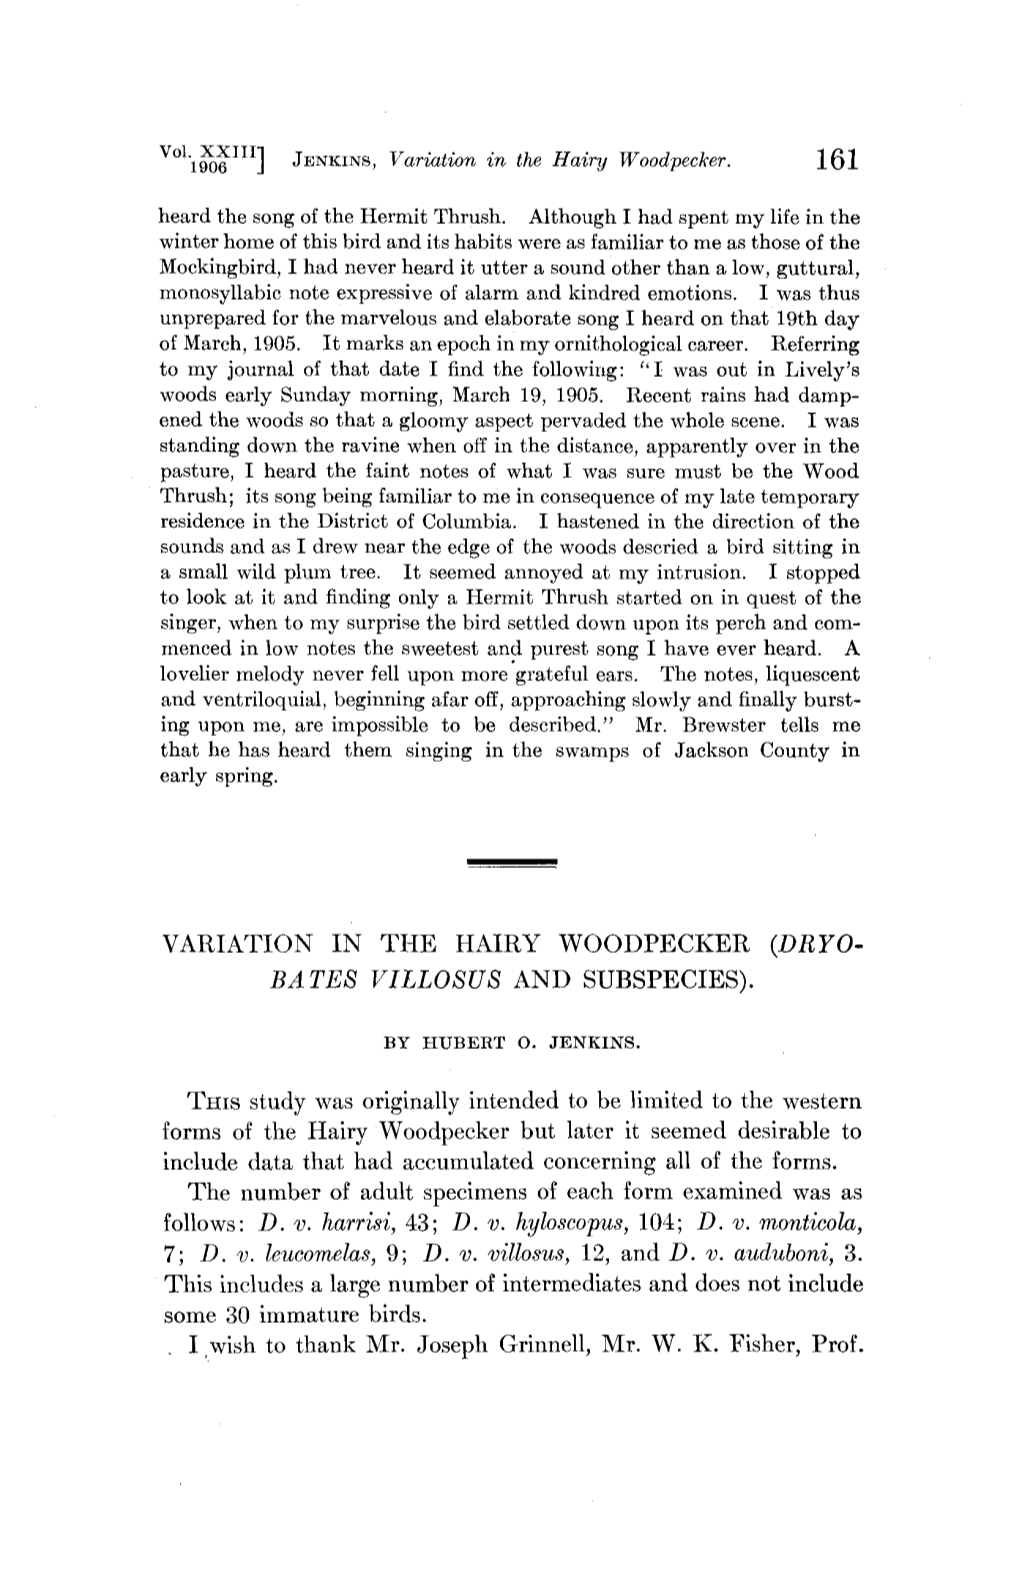 Variation in the Hairy Woodpecker (Dryo- Bates Villosus and Subspecies)